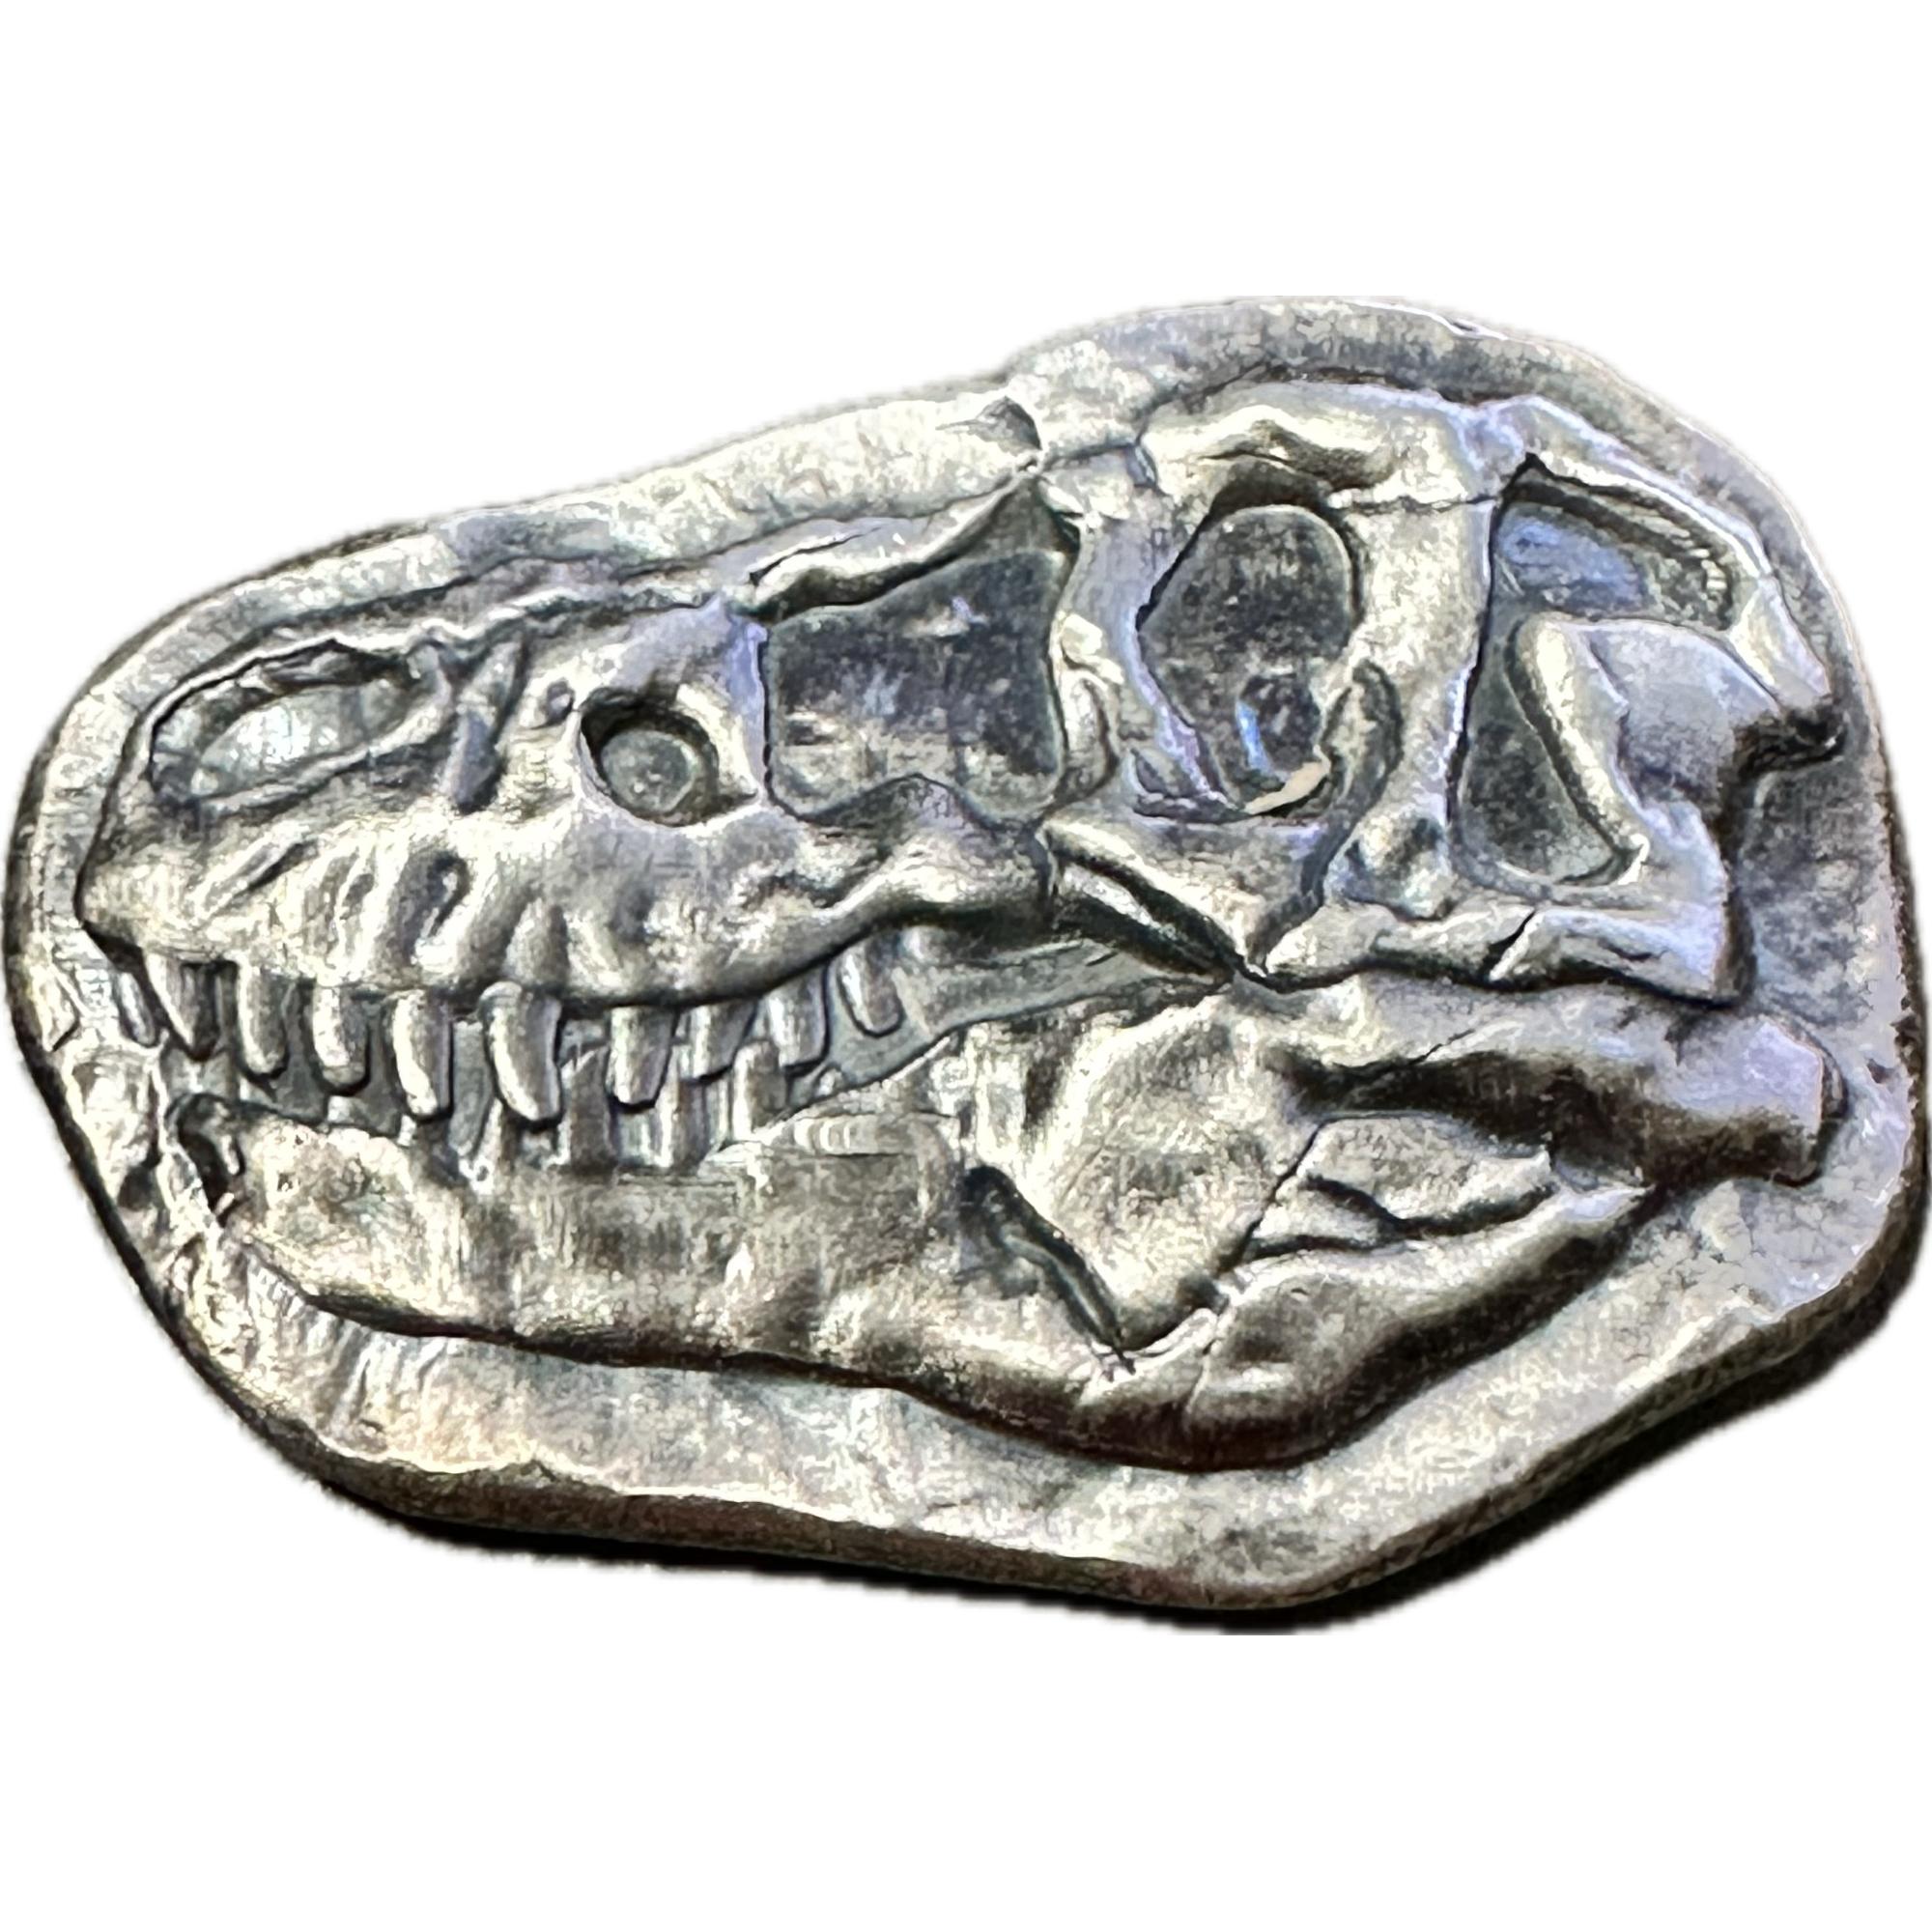 Trex head medallion, 3 troy oz of .999 silver Prehistoric Online